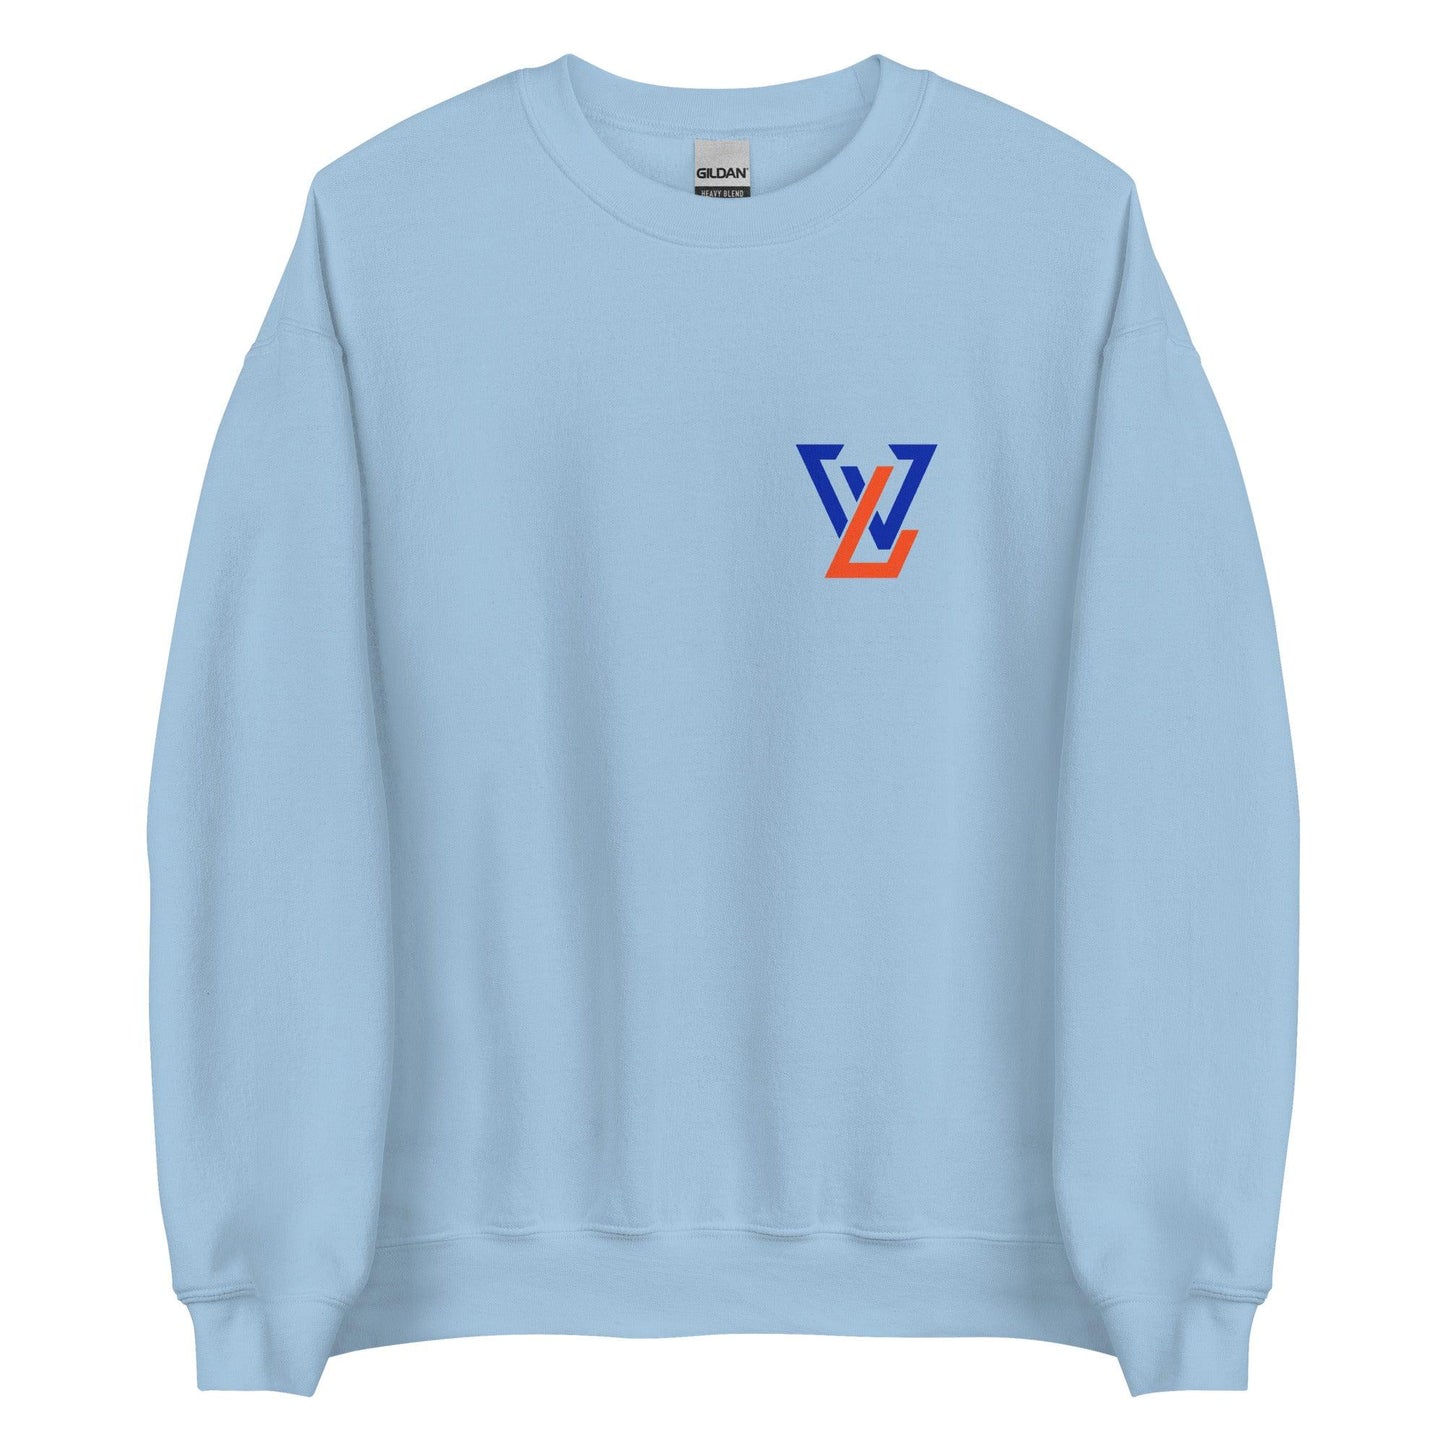 Wyatt Langford “WL” Sweatshirt - Fan Arch